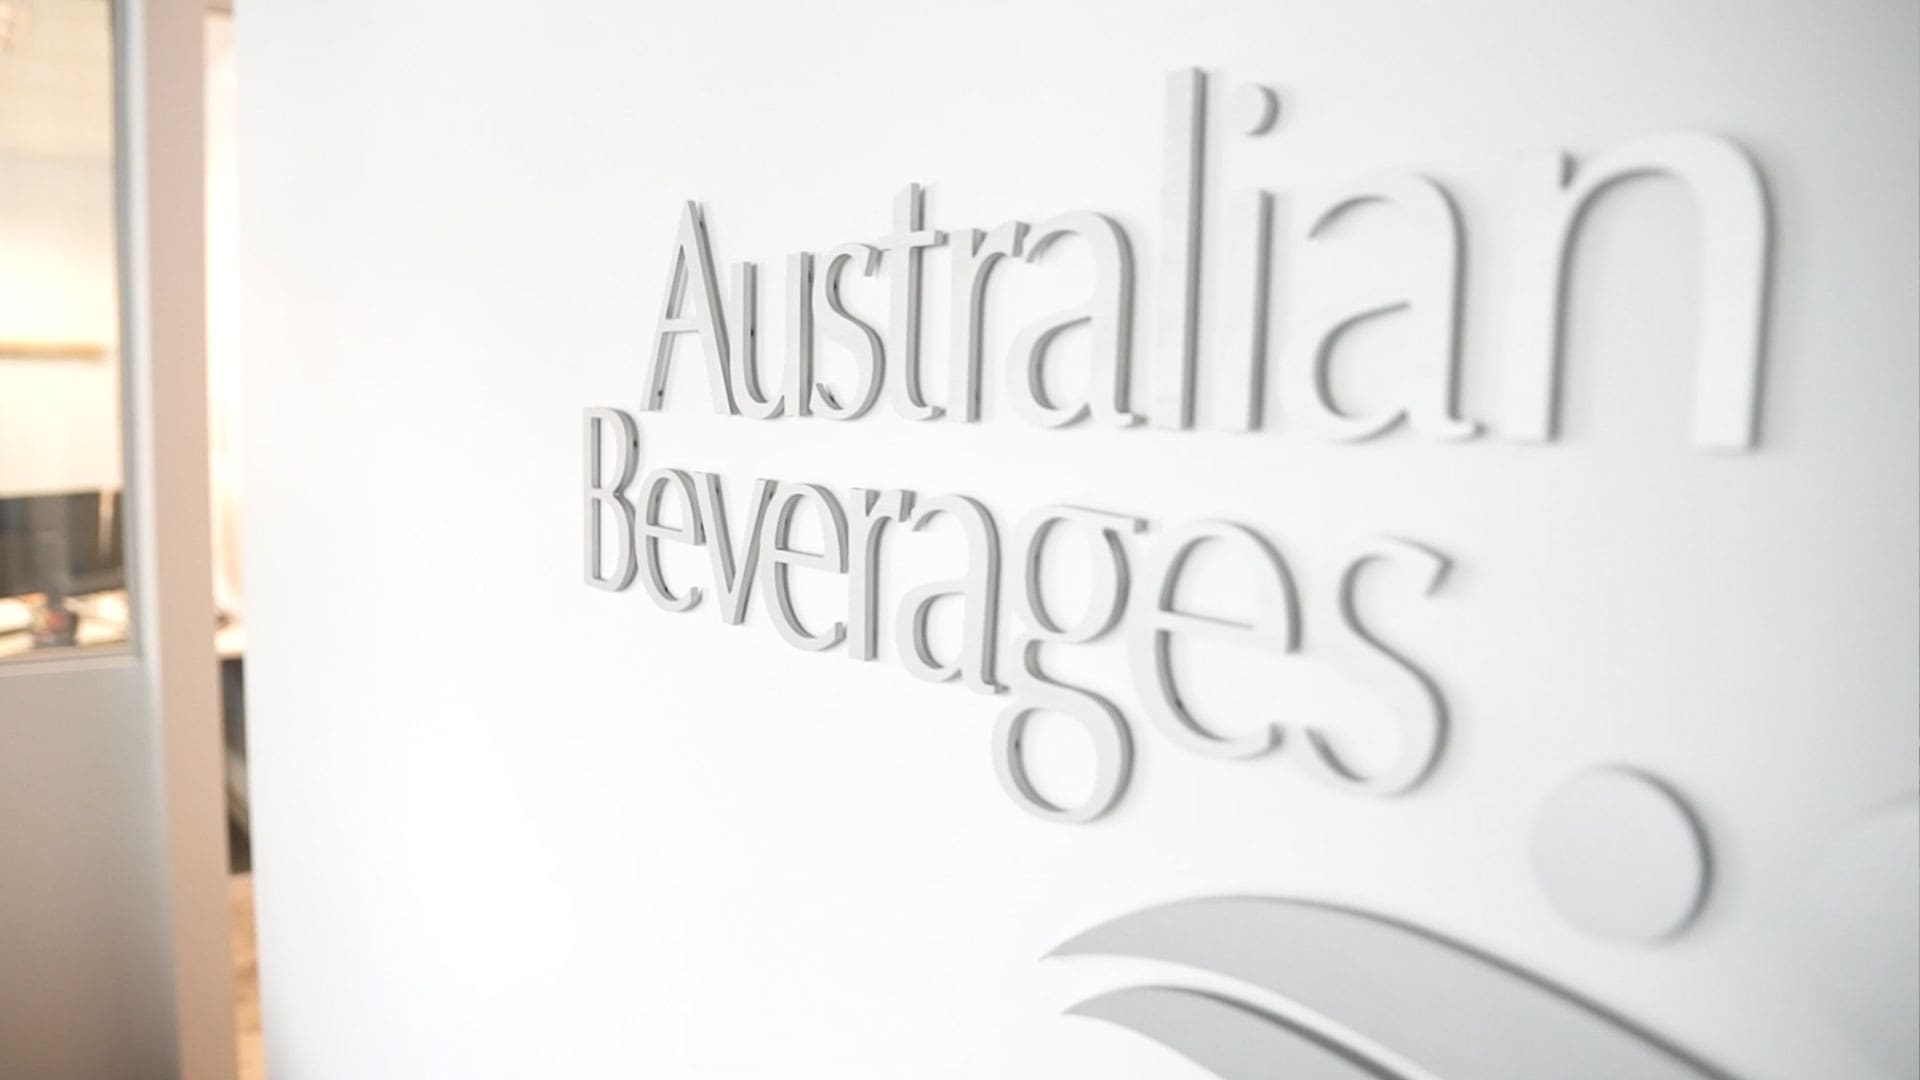 Australian Beverages Council Website - Web development - Kicking Pixel